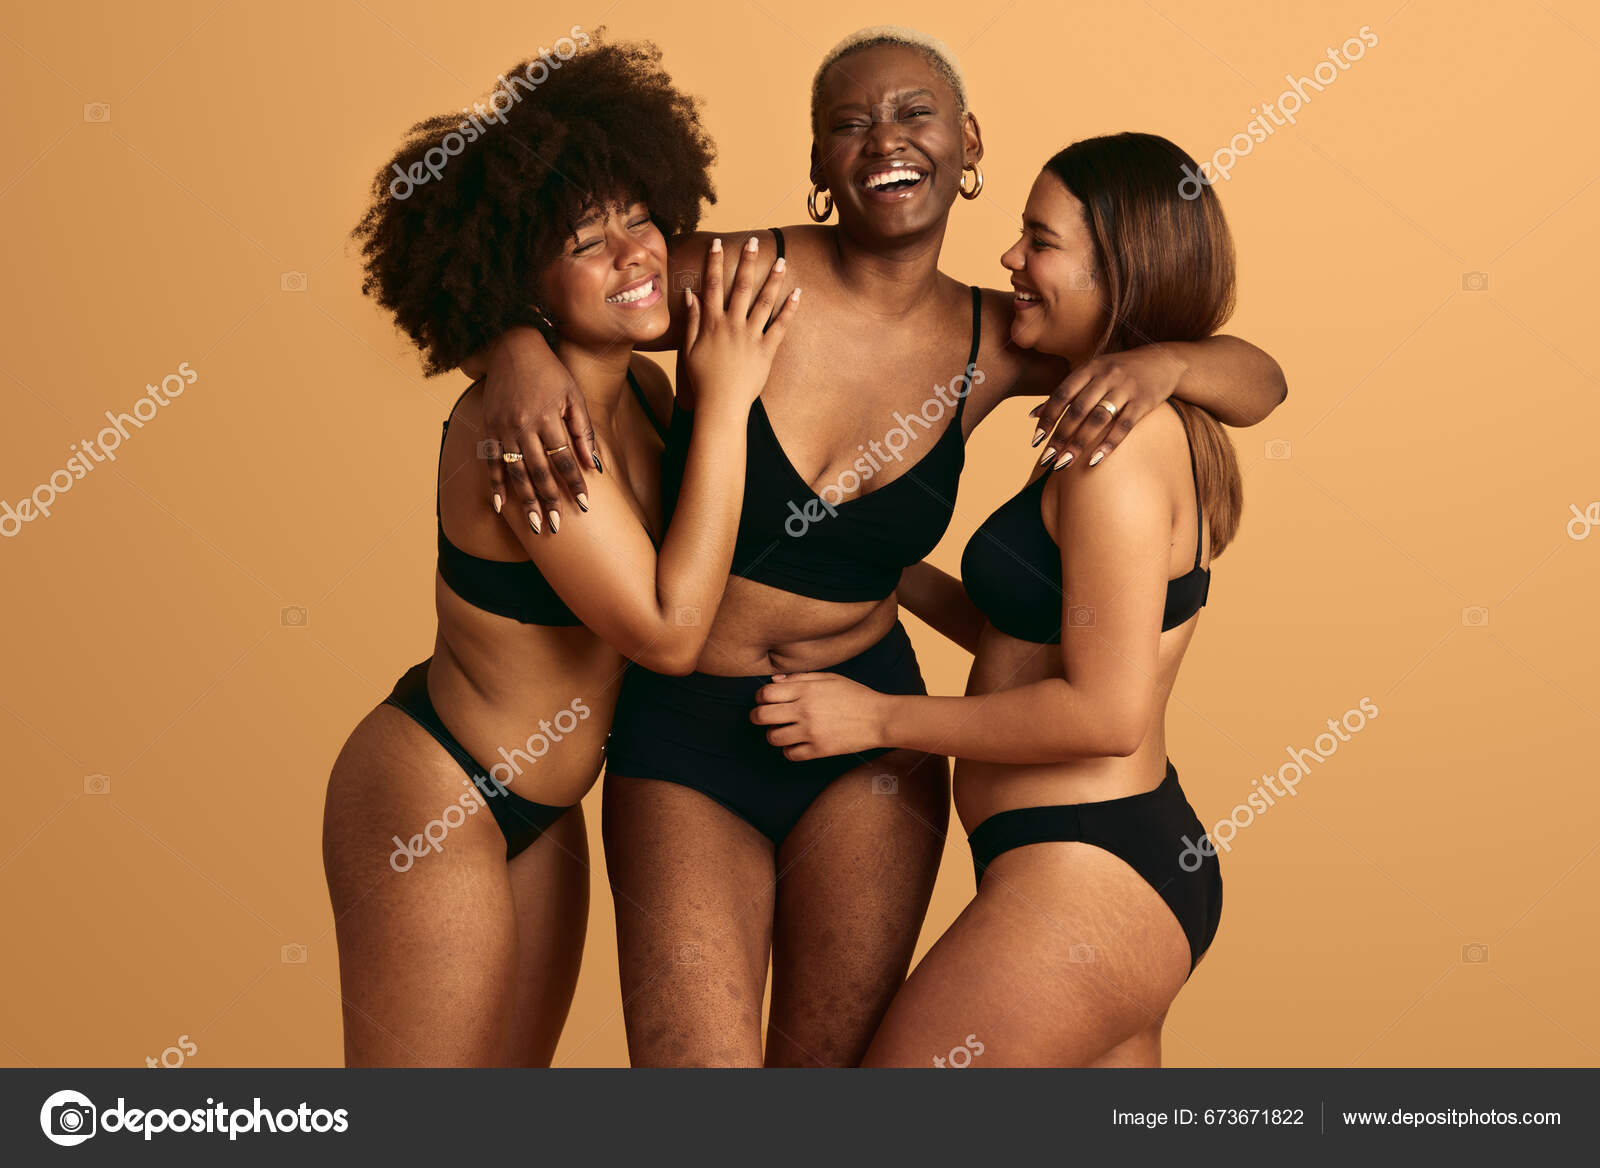 https://st5.depositphotos.com/5228995/67367/i/1600/depositphotos_673671822-stock-photo-cheerful-diverse-girlfriends-black-underwear.jpg